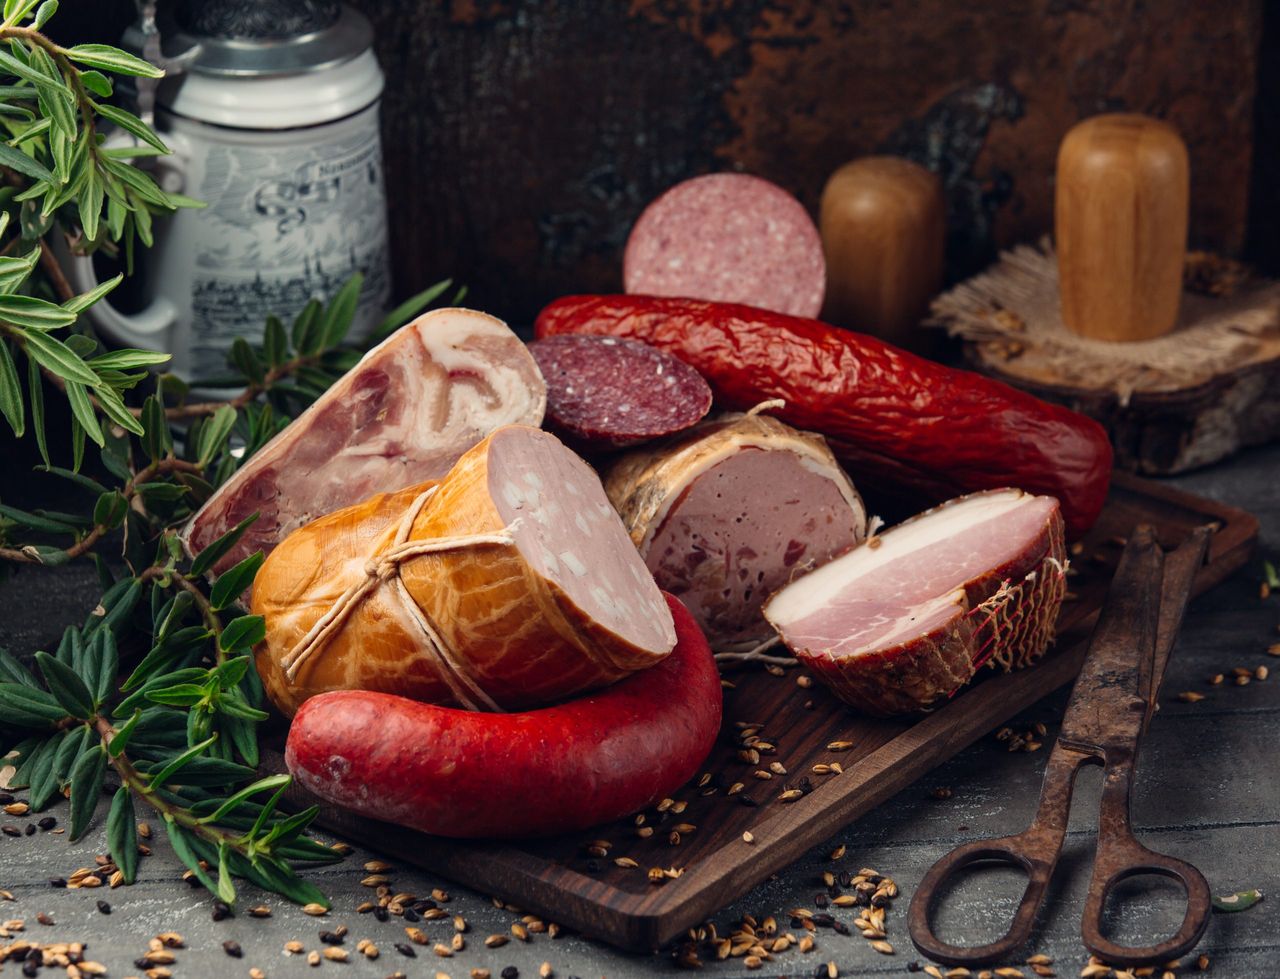 sausage assortment salami, pepperoni, ham on wooden board